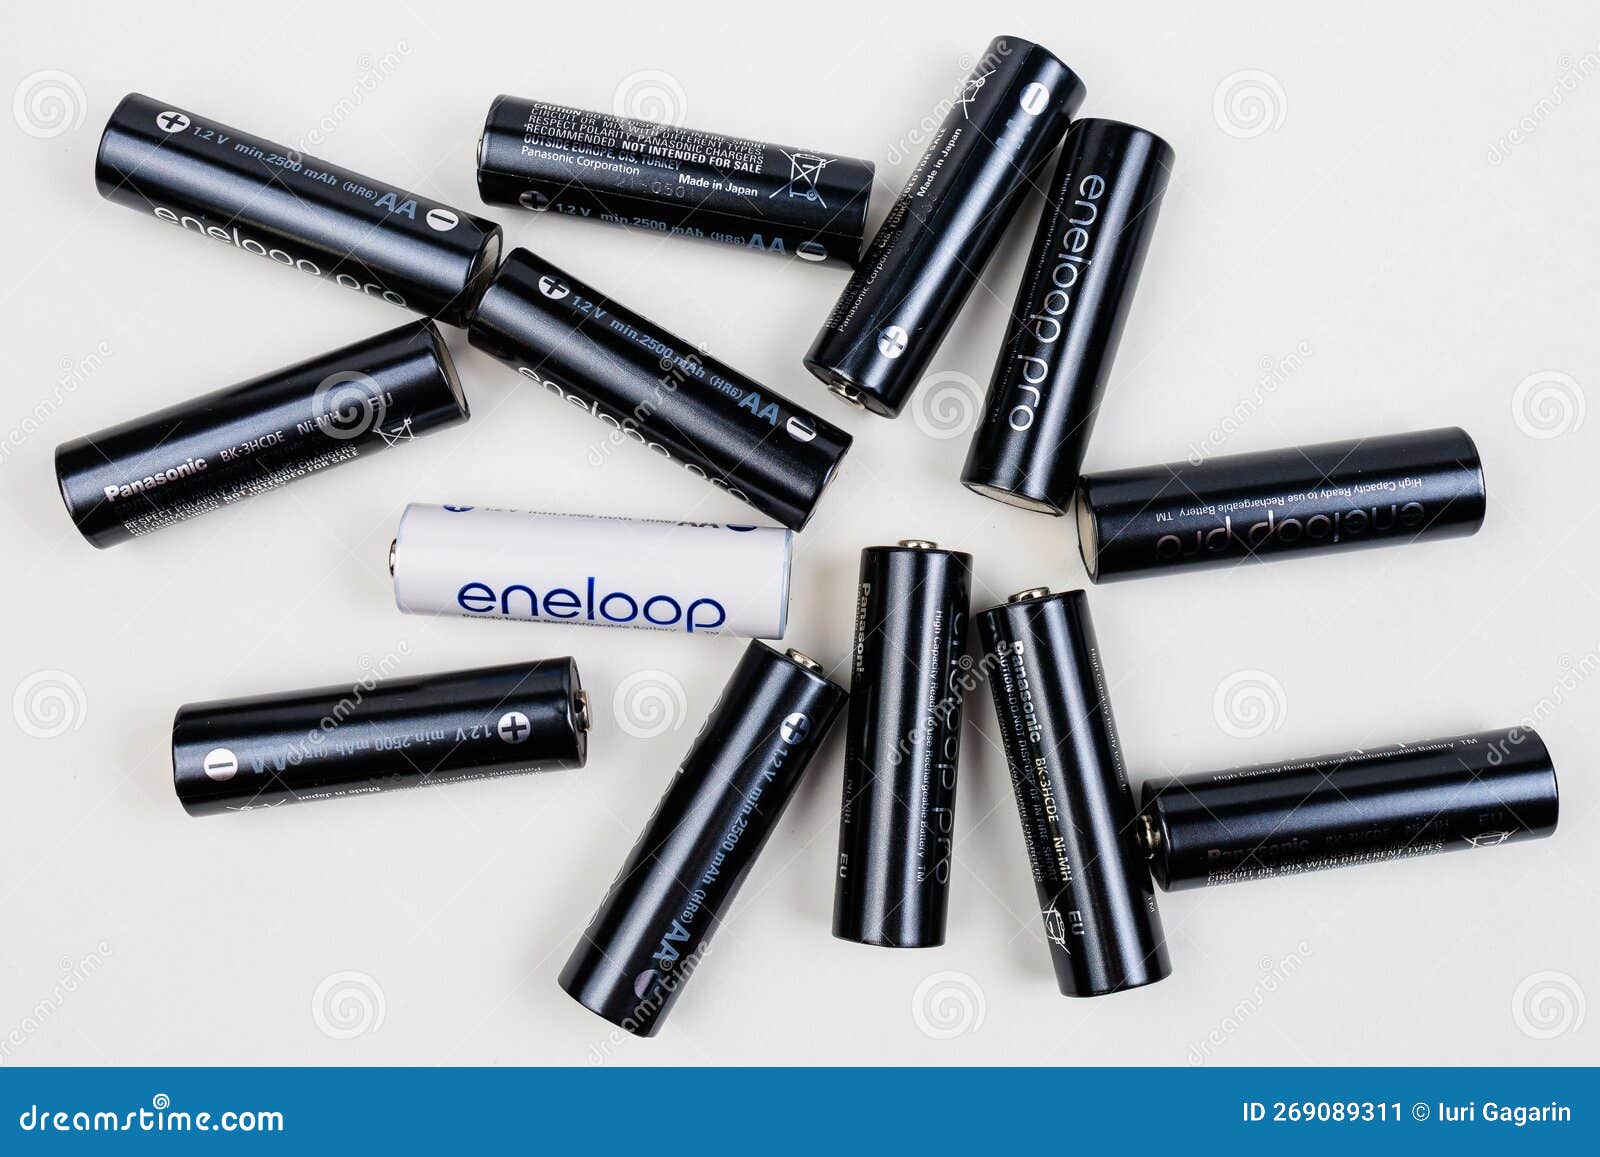 AA HR6 Panasonic Eneloop PRO 2550mAh 1.2V Rechargeable Battery for